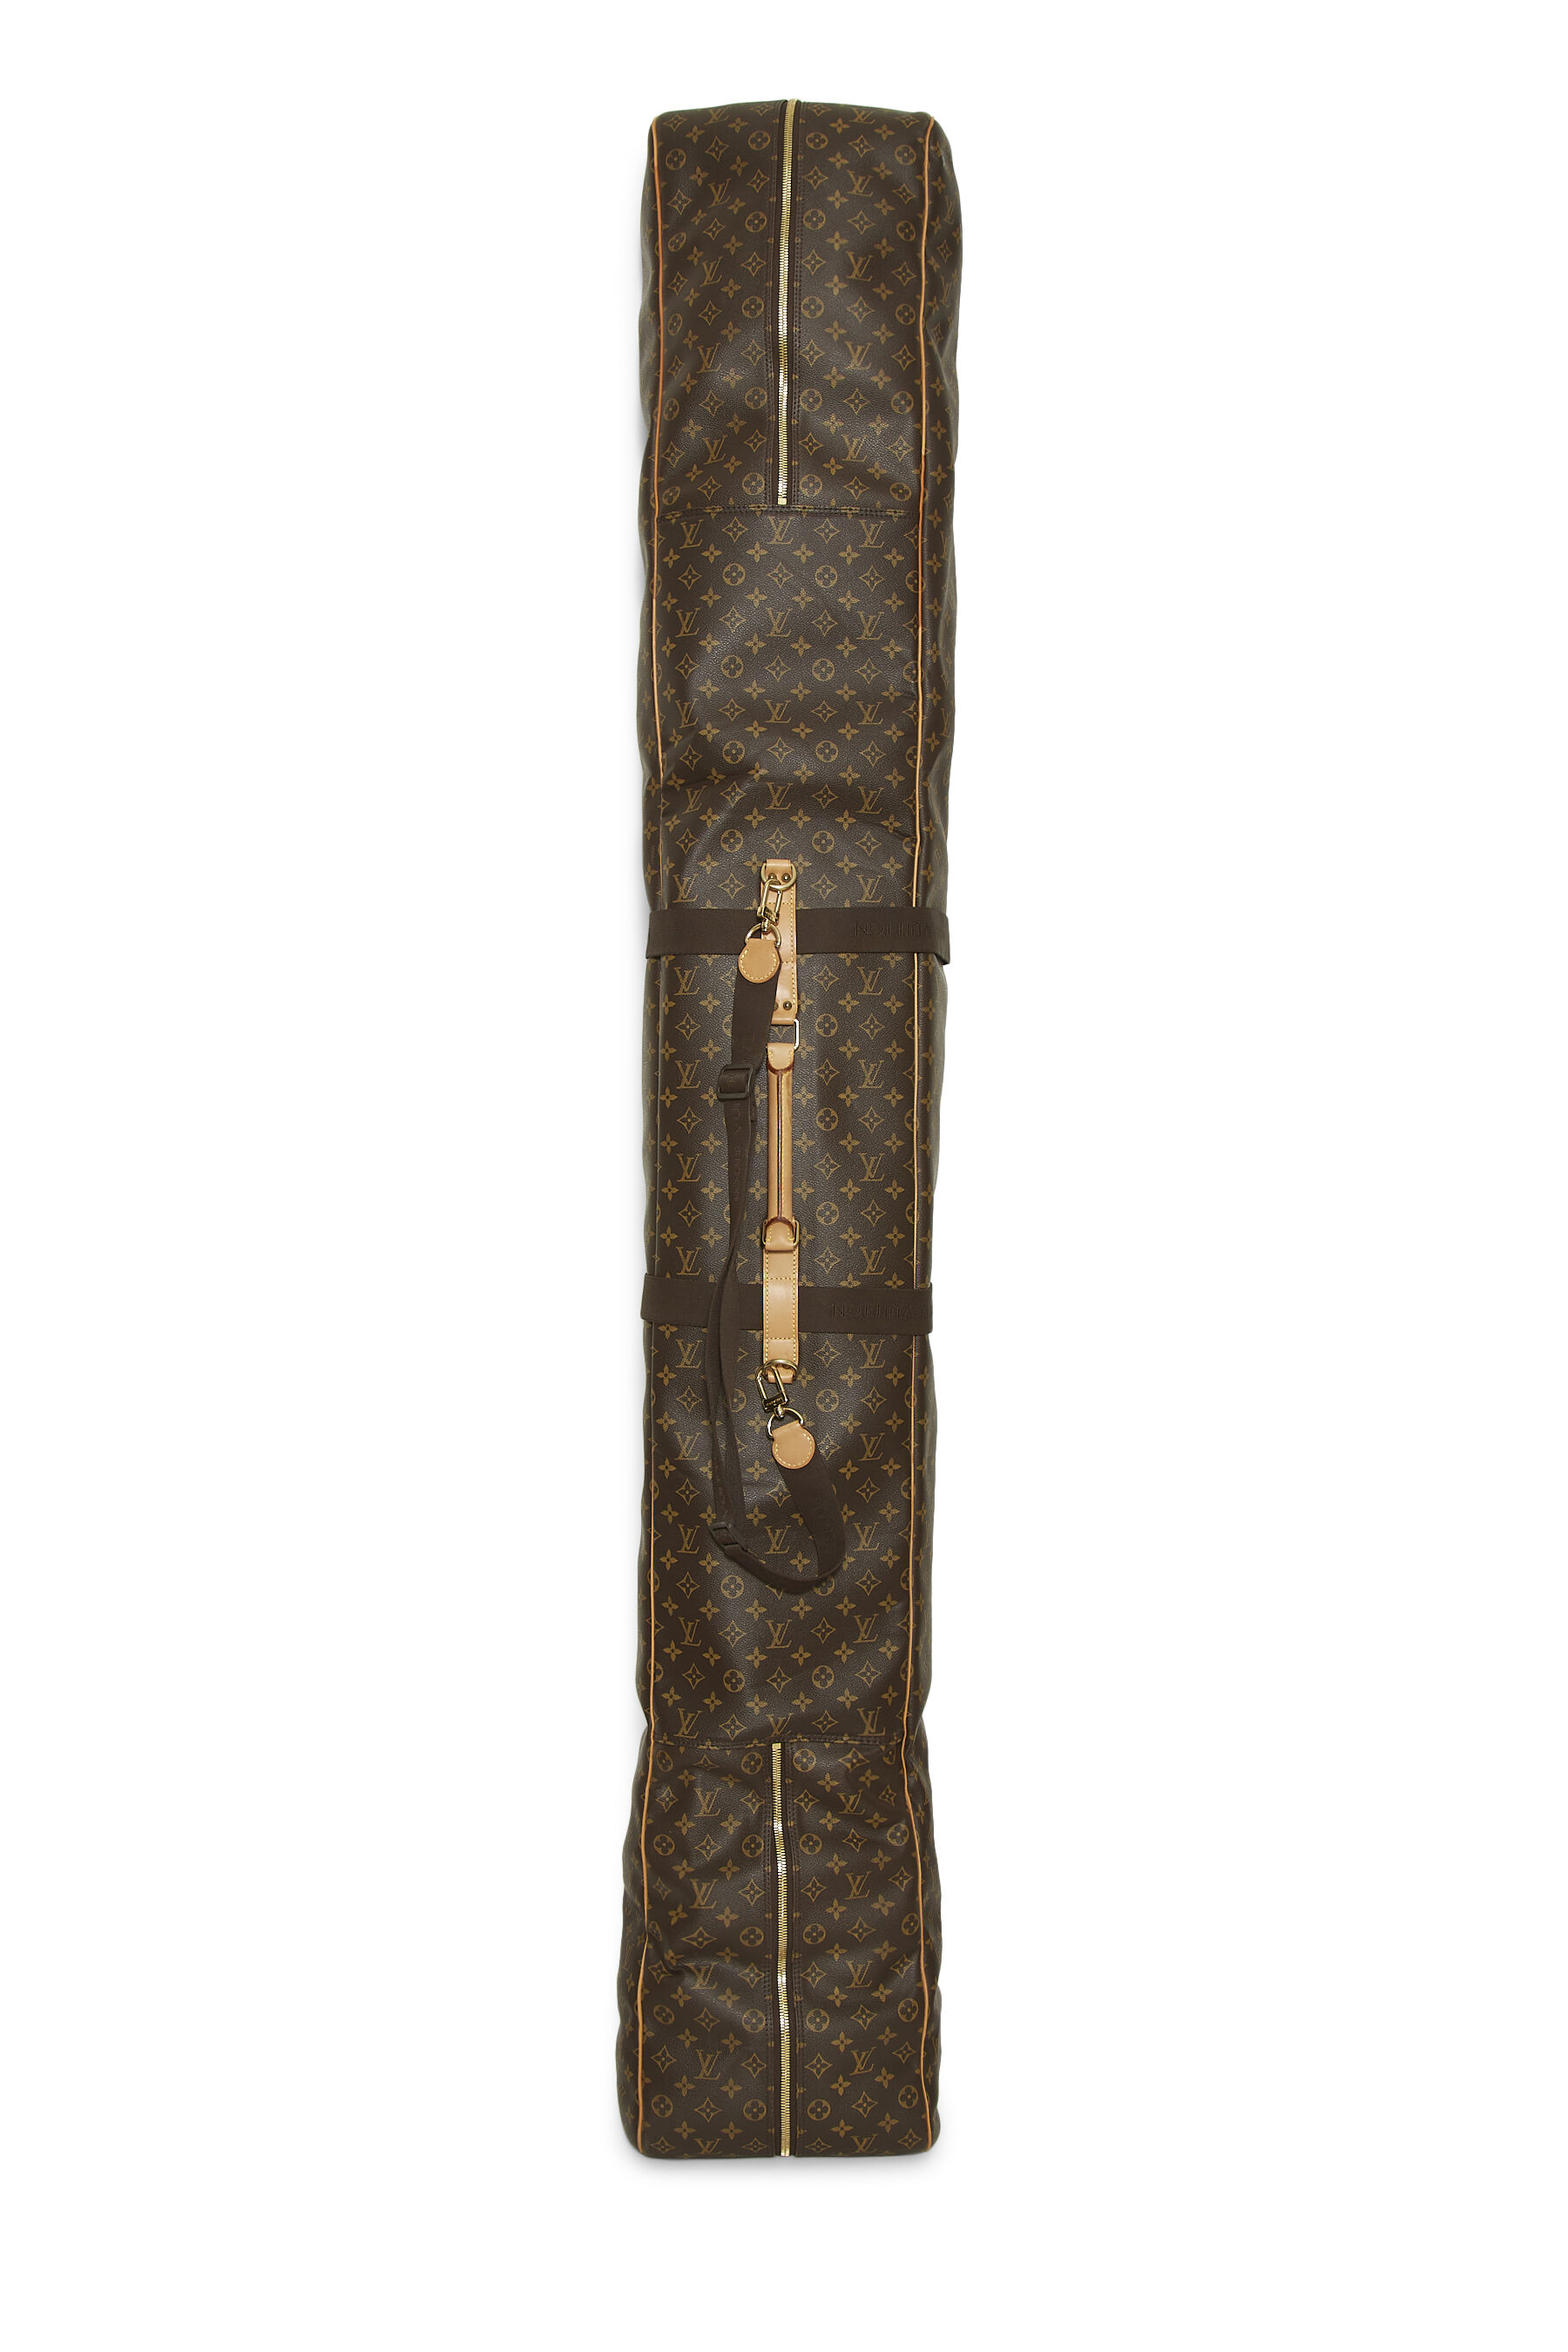 Louis Vuitton - Monogram Canvas Ski Bag